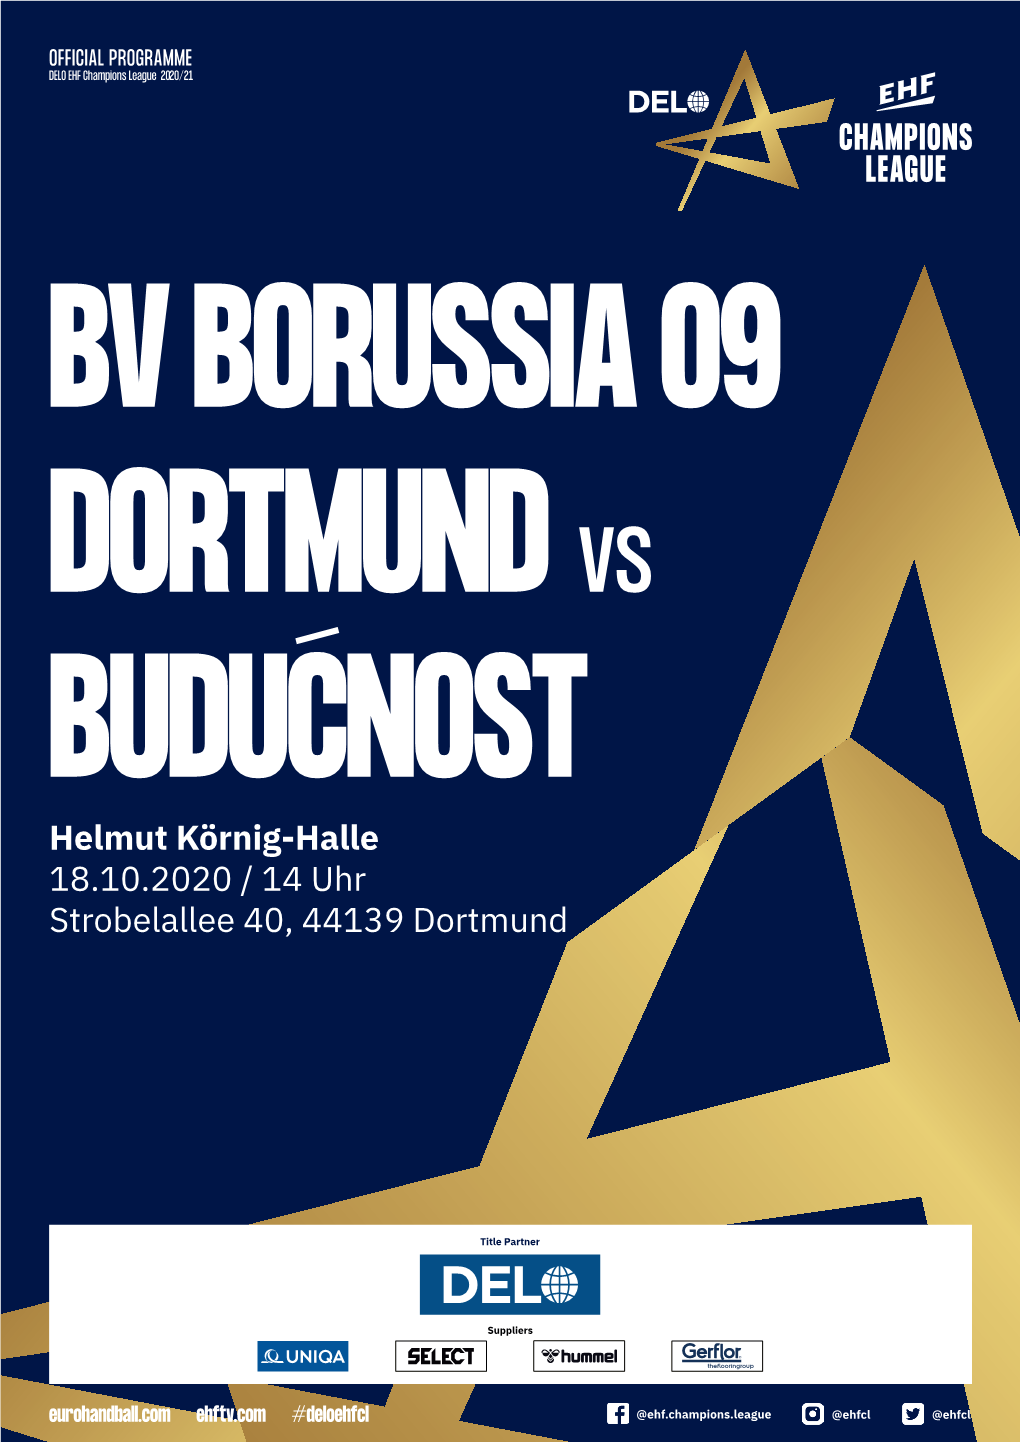 Helmut Körnig-Halle 18.10.2020 / 14 Uhr Strobelallee 40, 44139 Dortmund